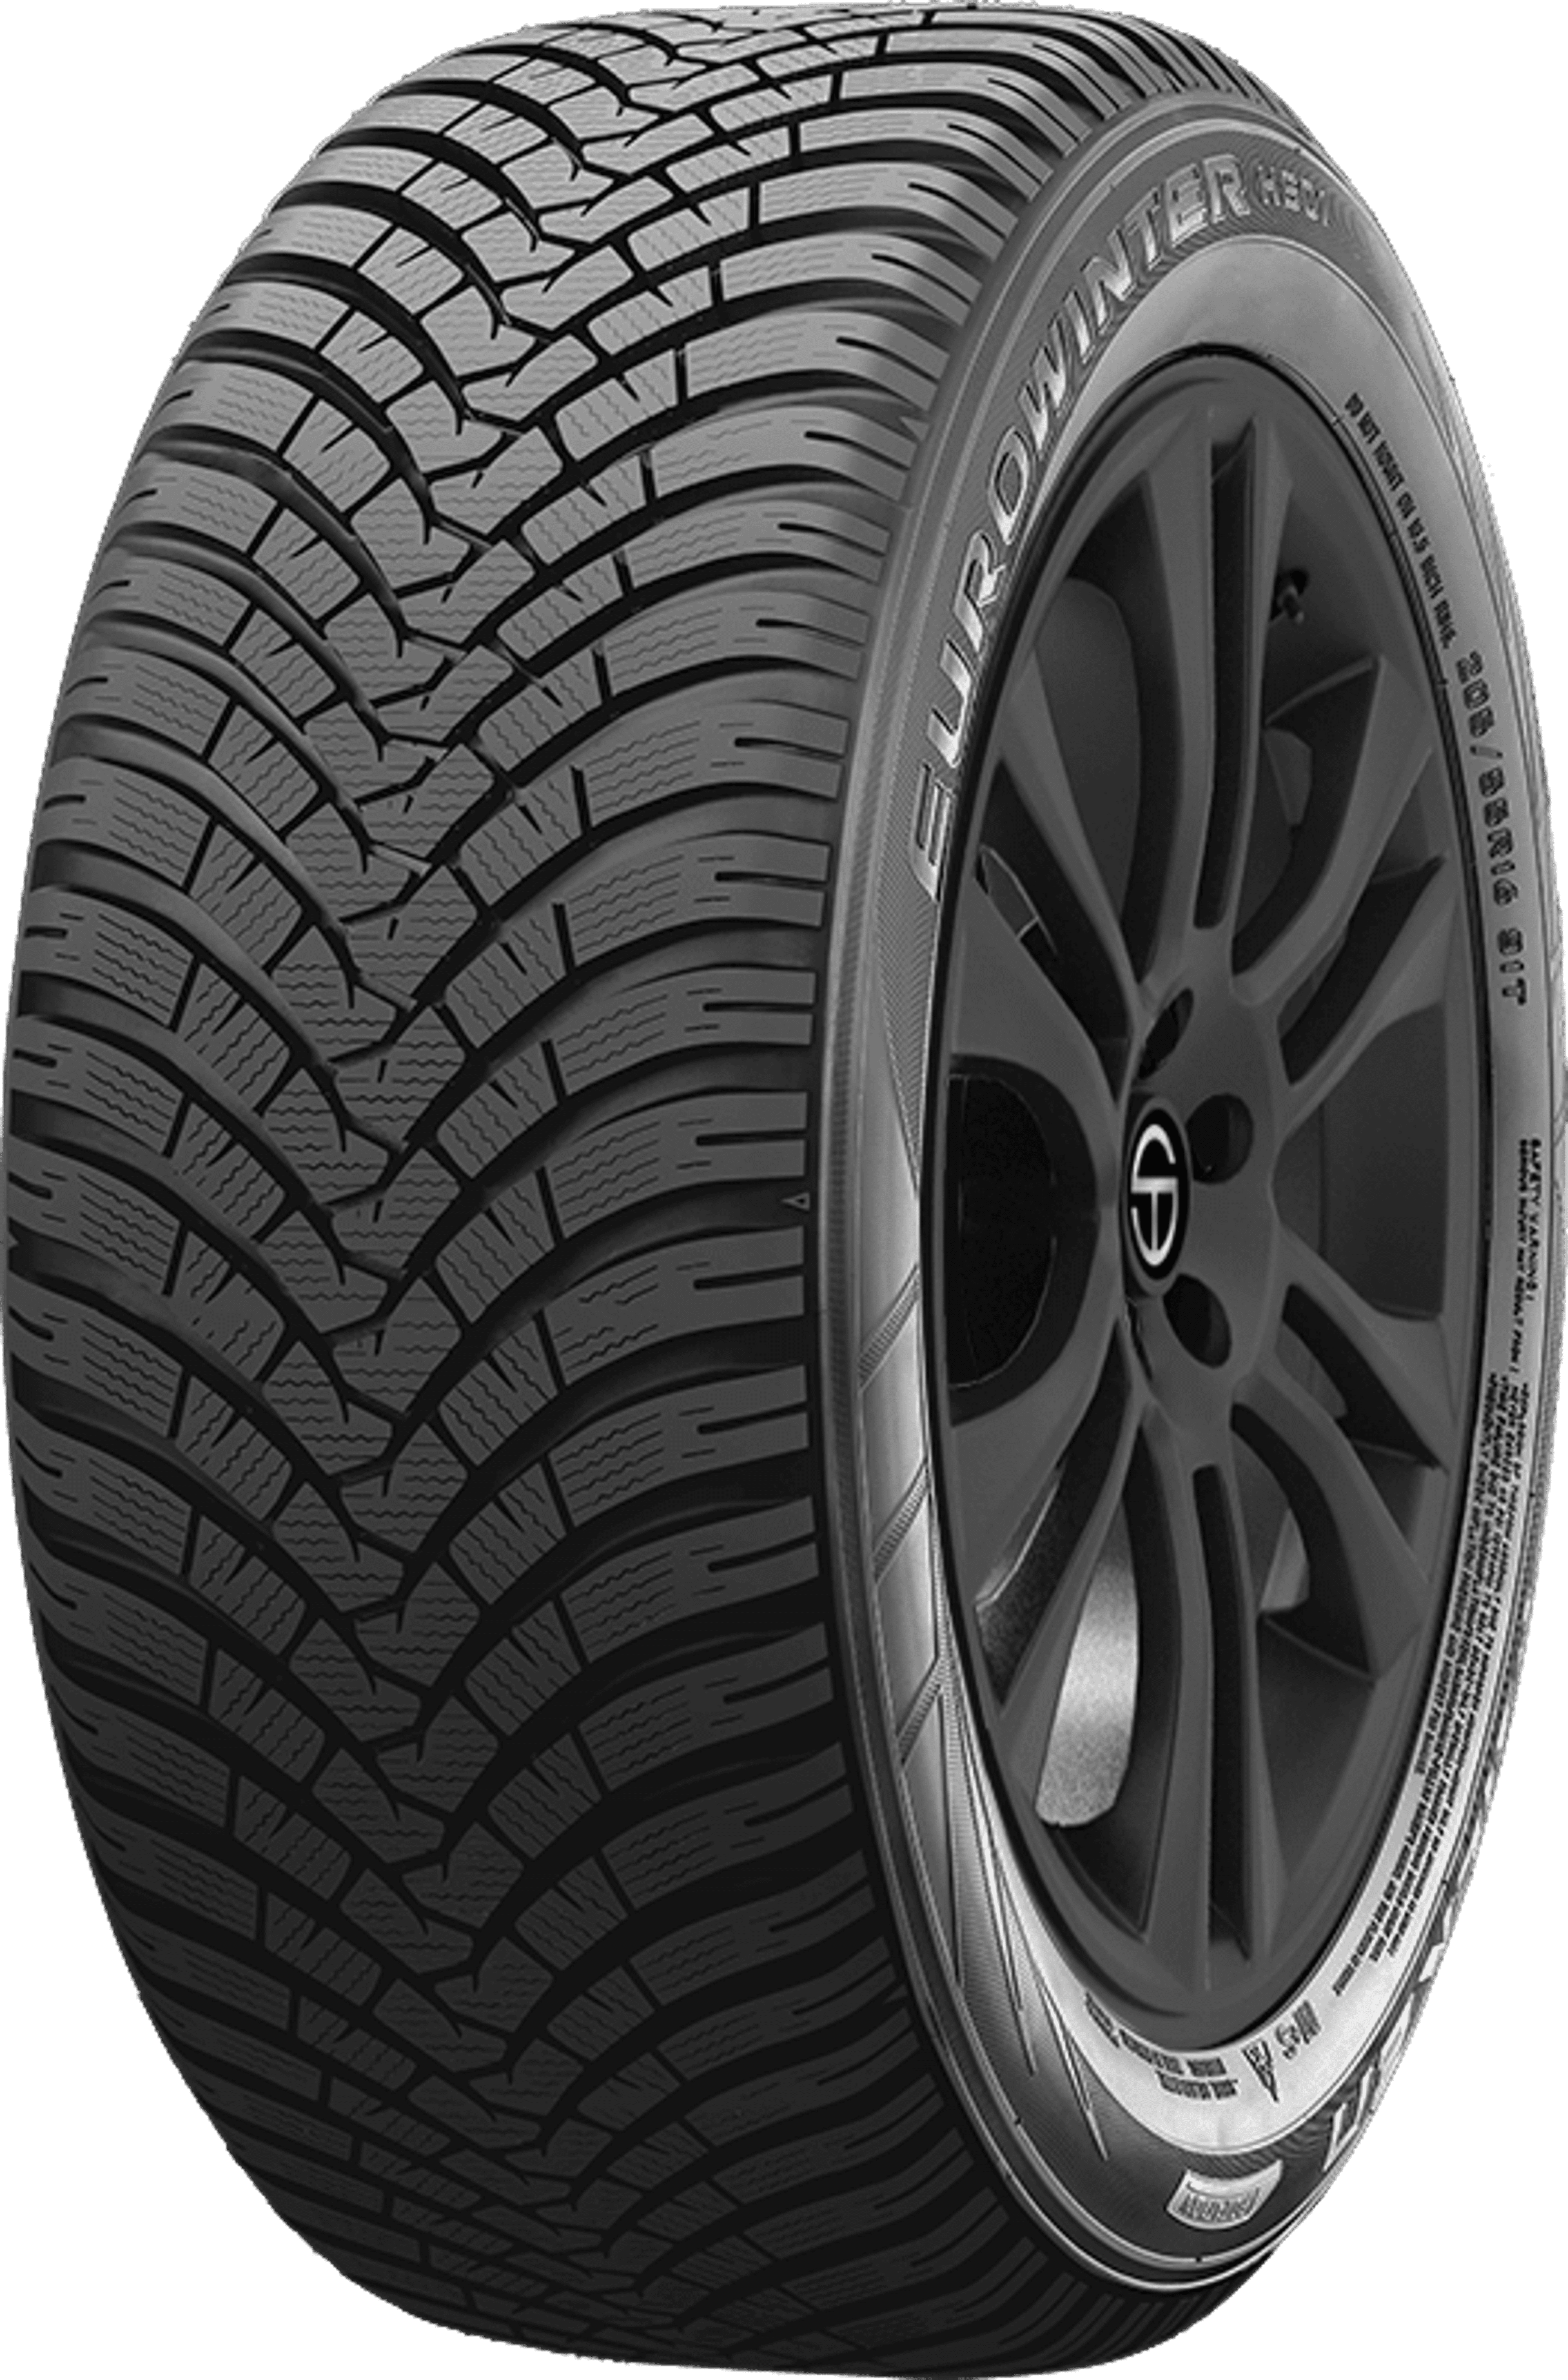 Buy Falken Eurowinter HS01 Tires Online | SimpleTire